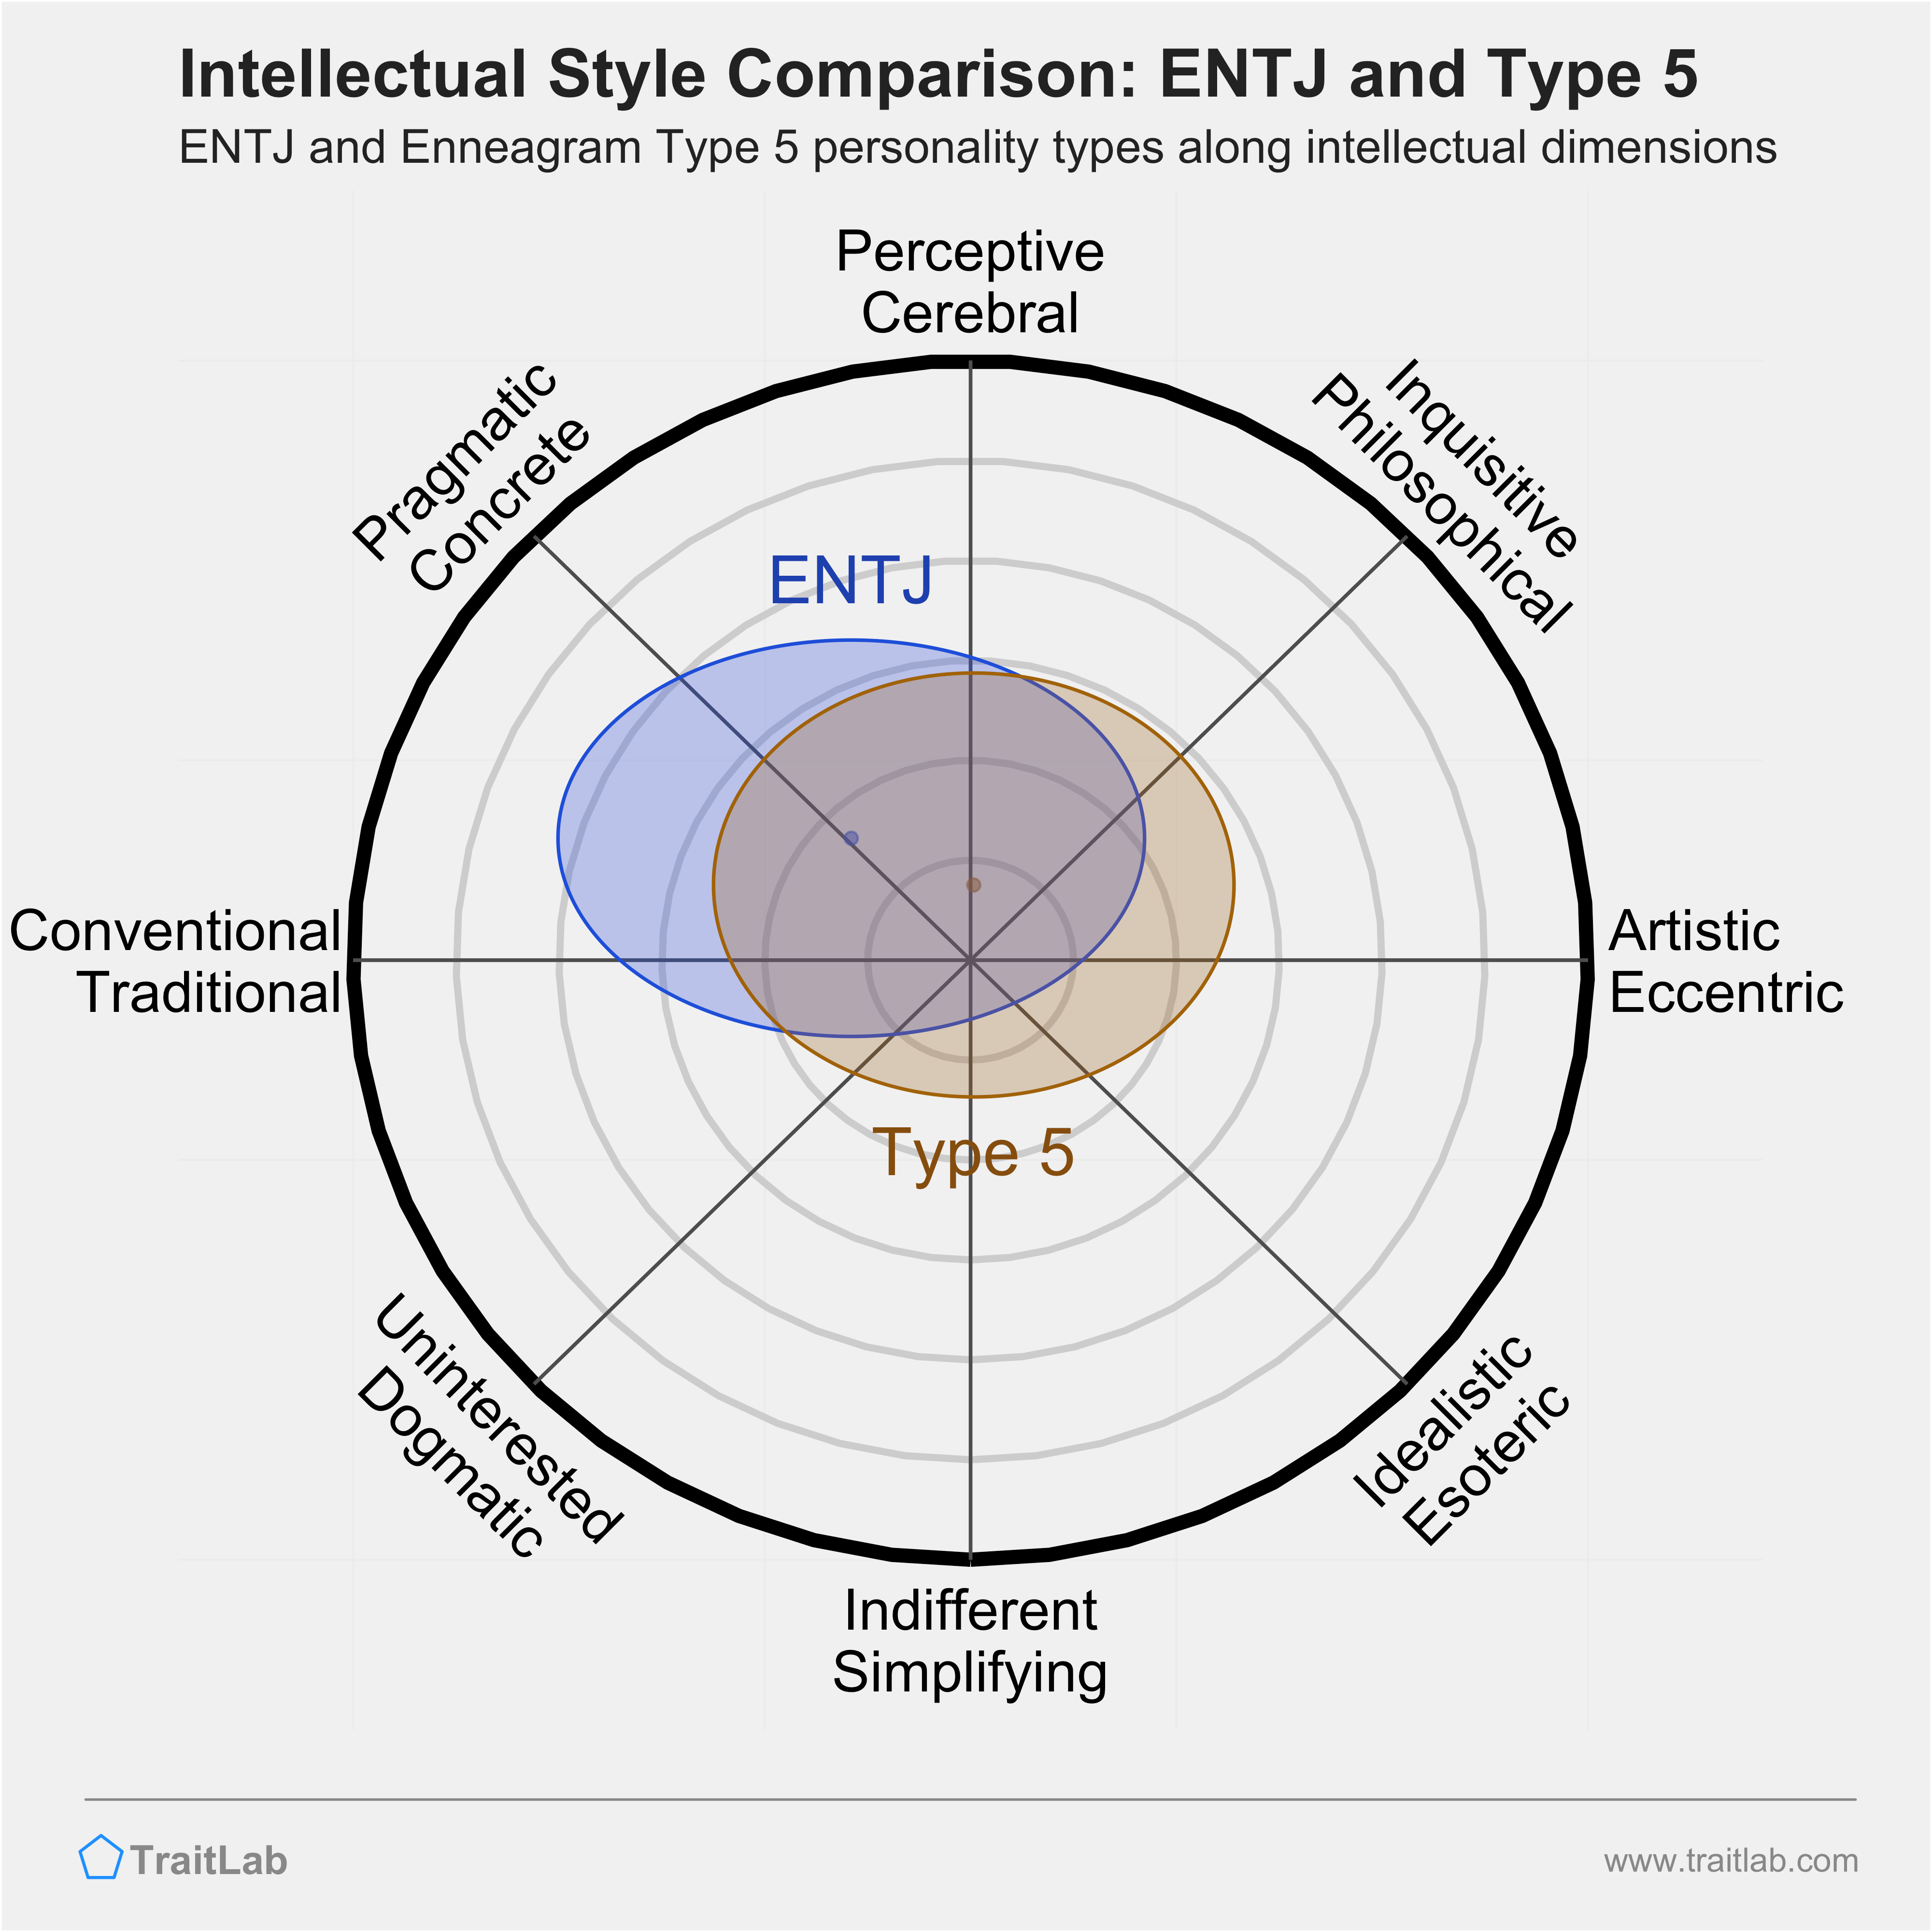 ENTJ and Type 5 comparison across intellectual dimensions